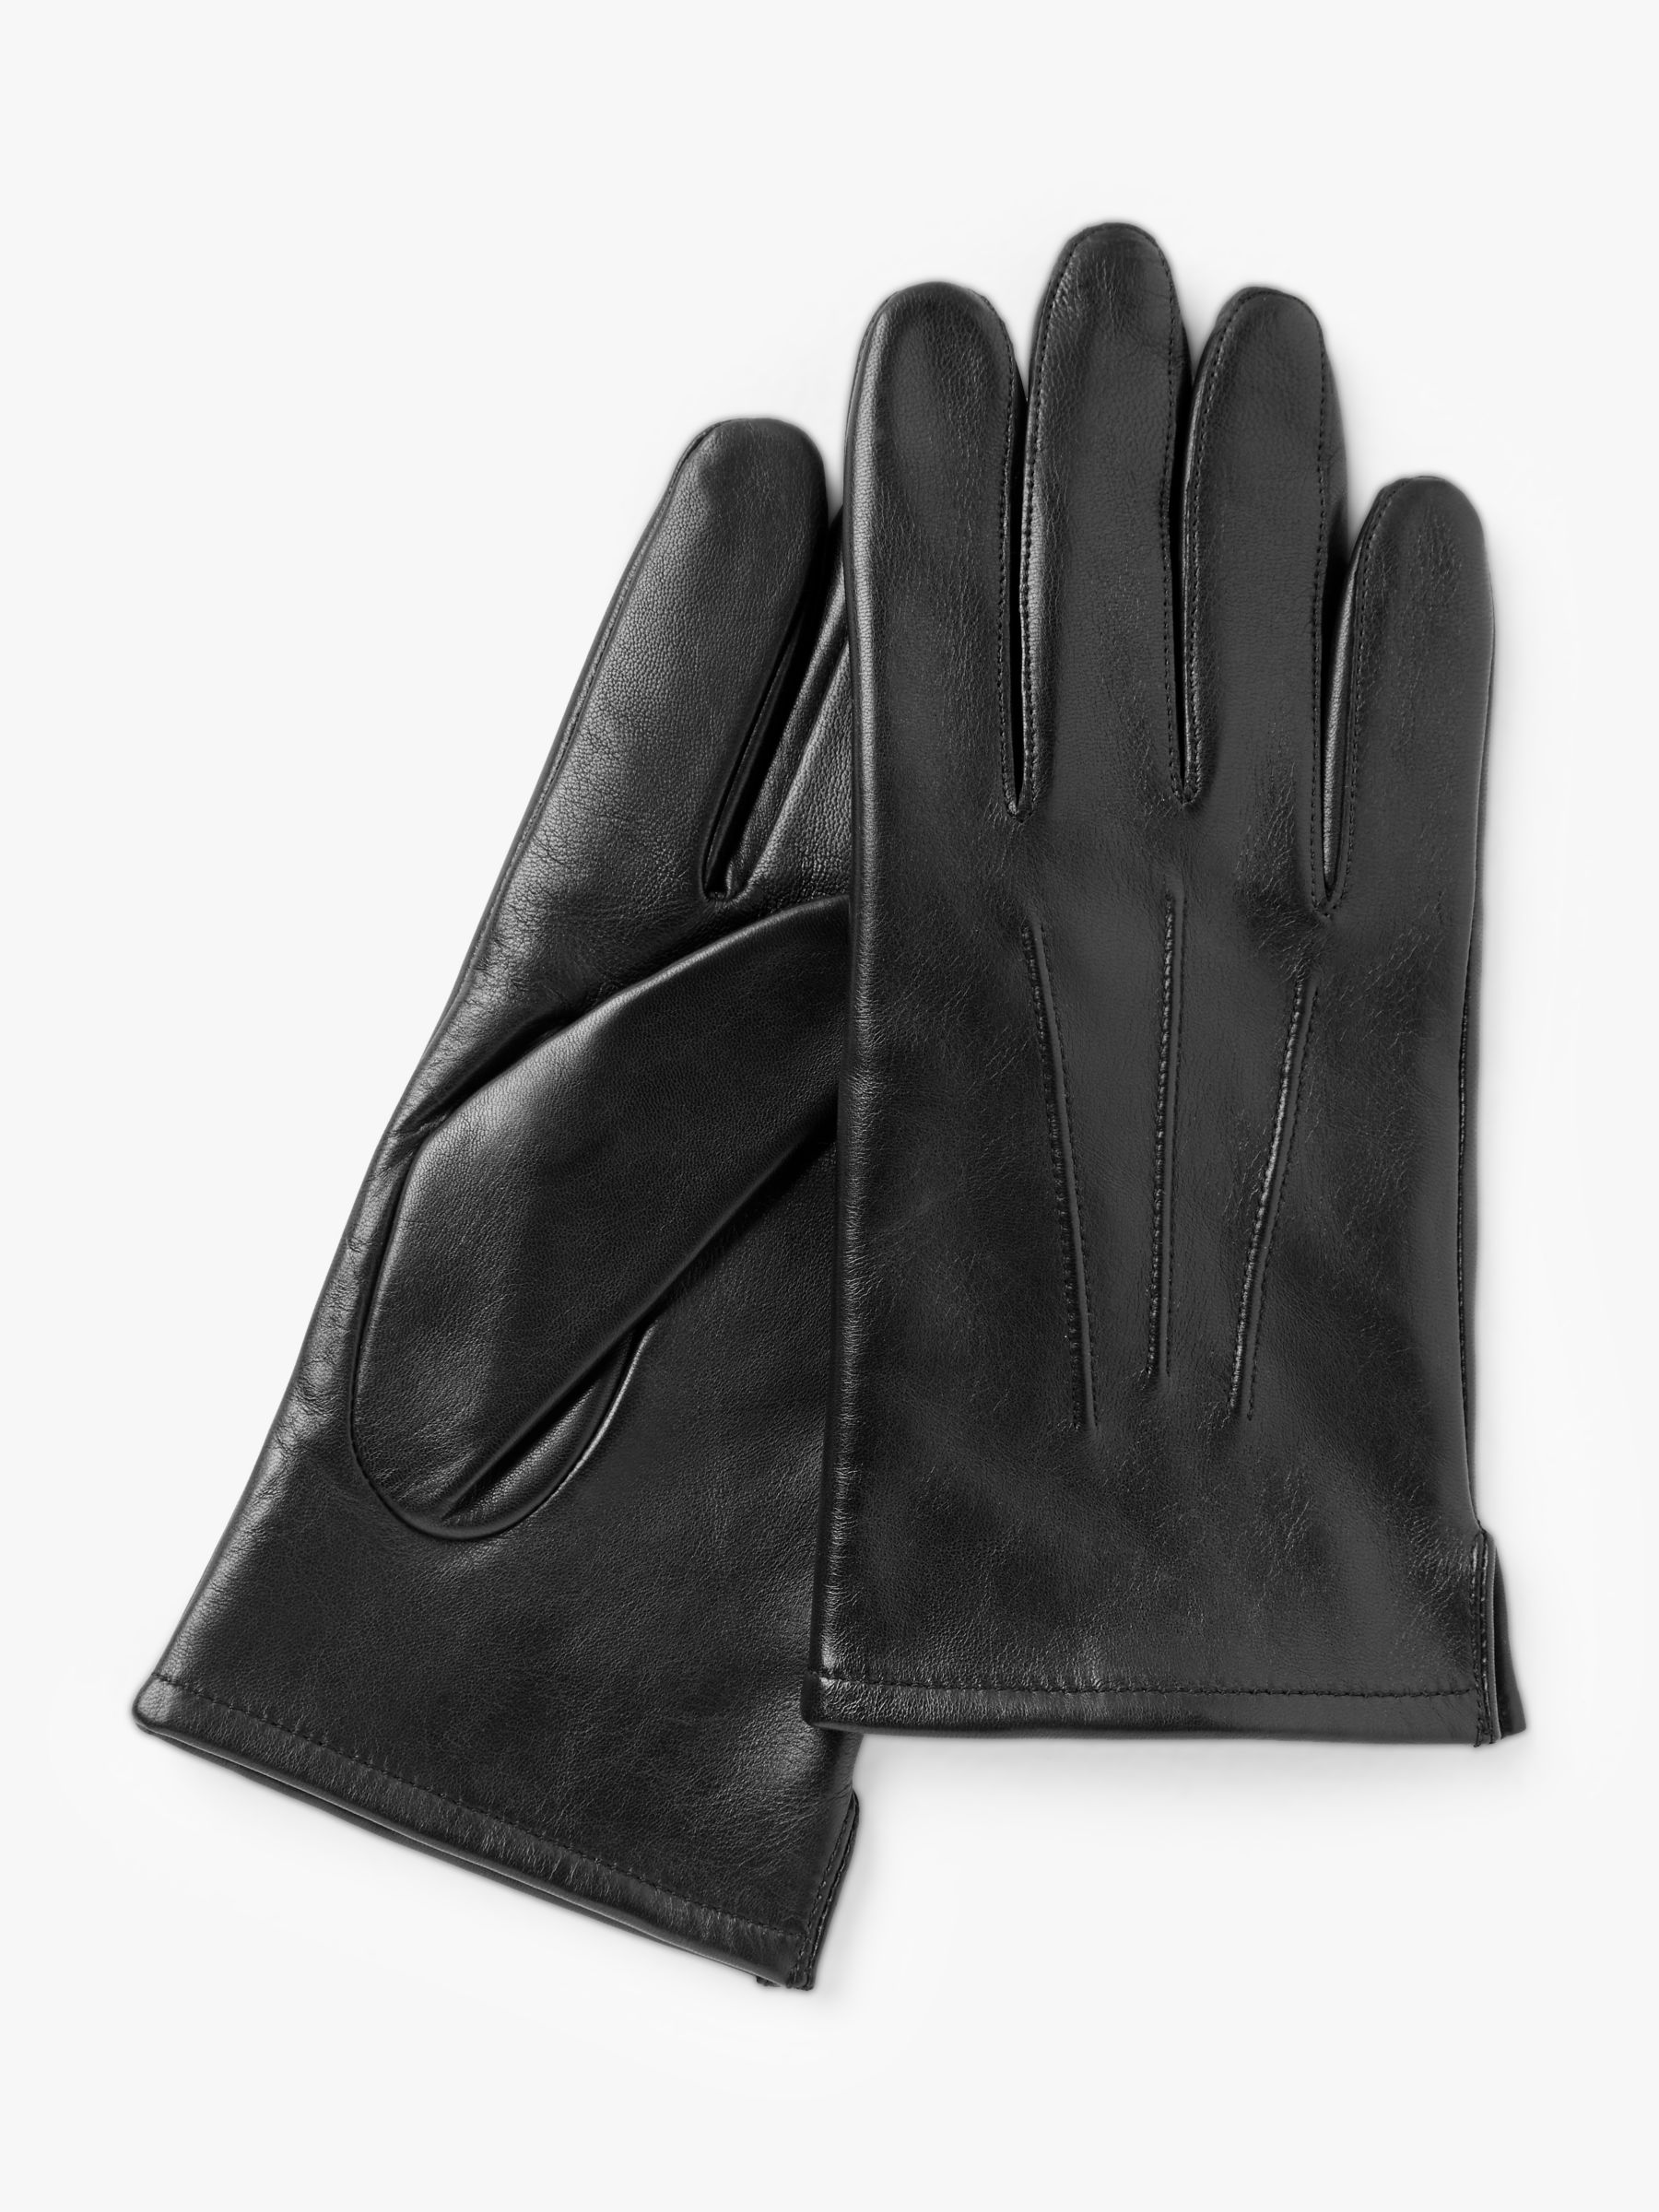 lined black leather gloves